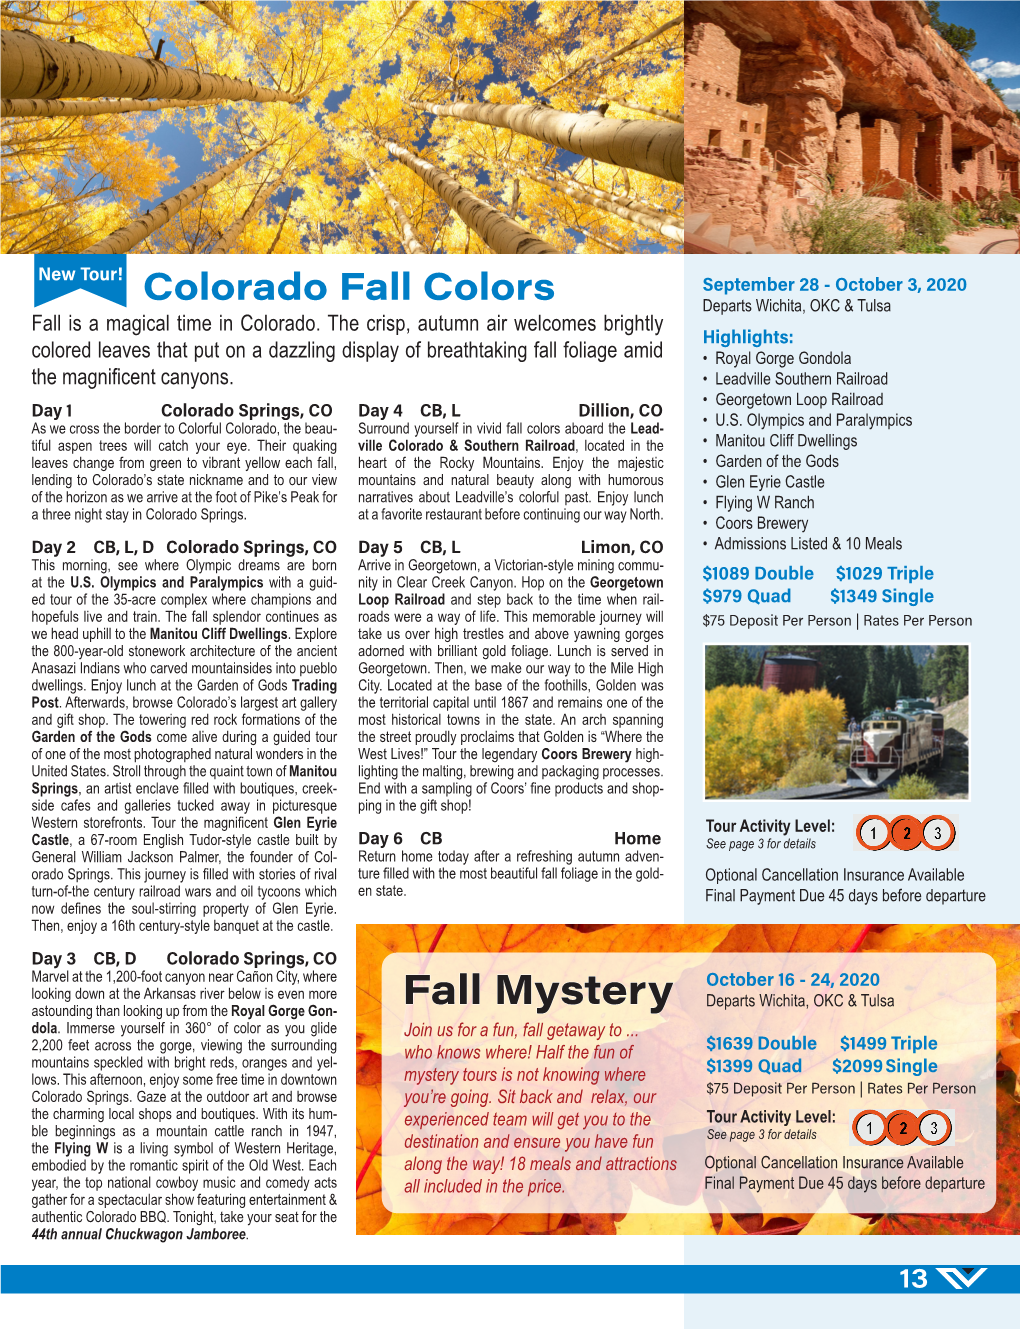 Colorado Fall Colors Departs Wichita, OKC & Tulsa Fall Is a Magical Time in Colorado